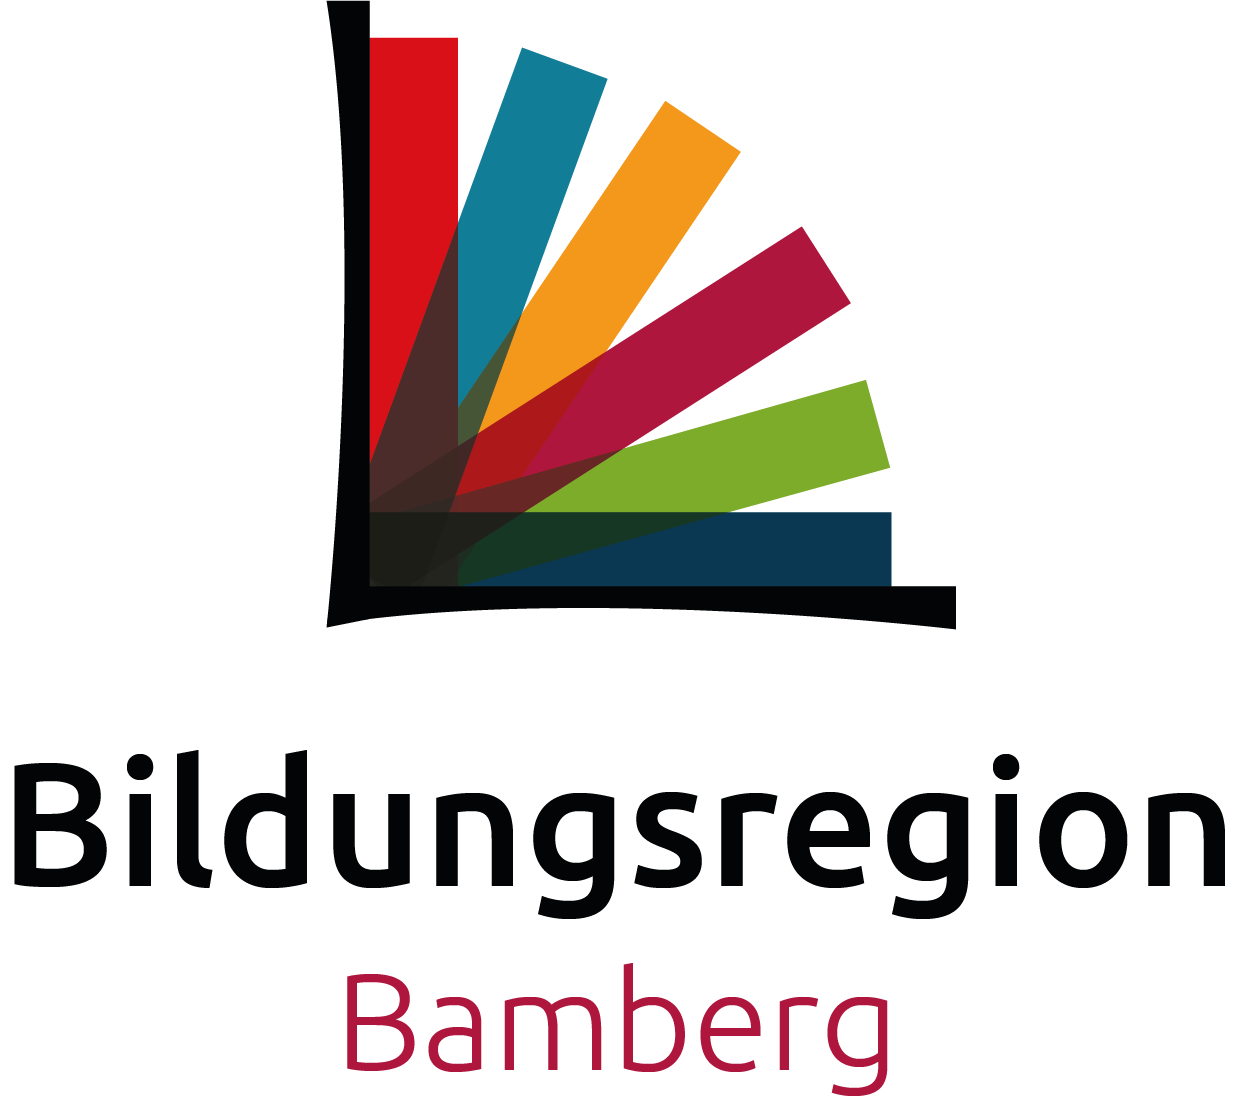 Bildungsregion Bamberg